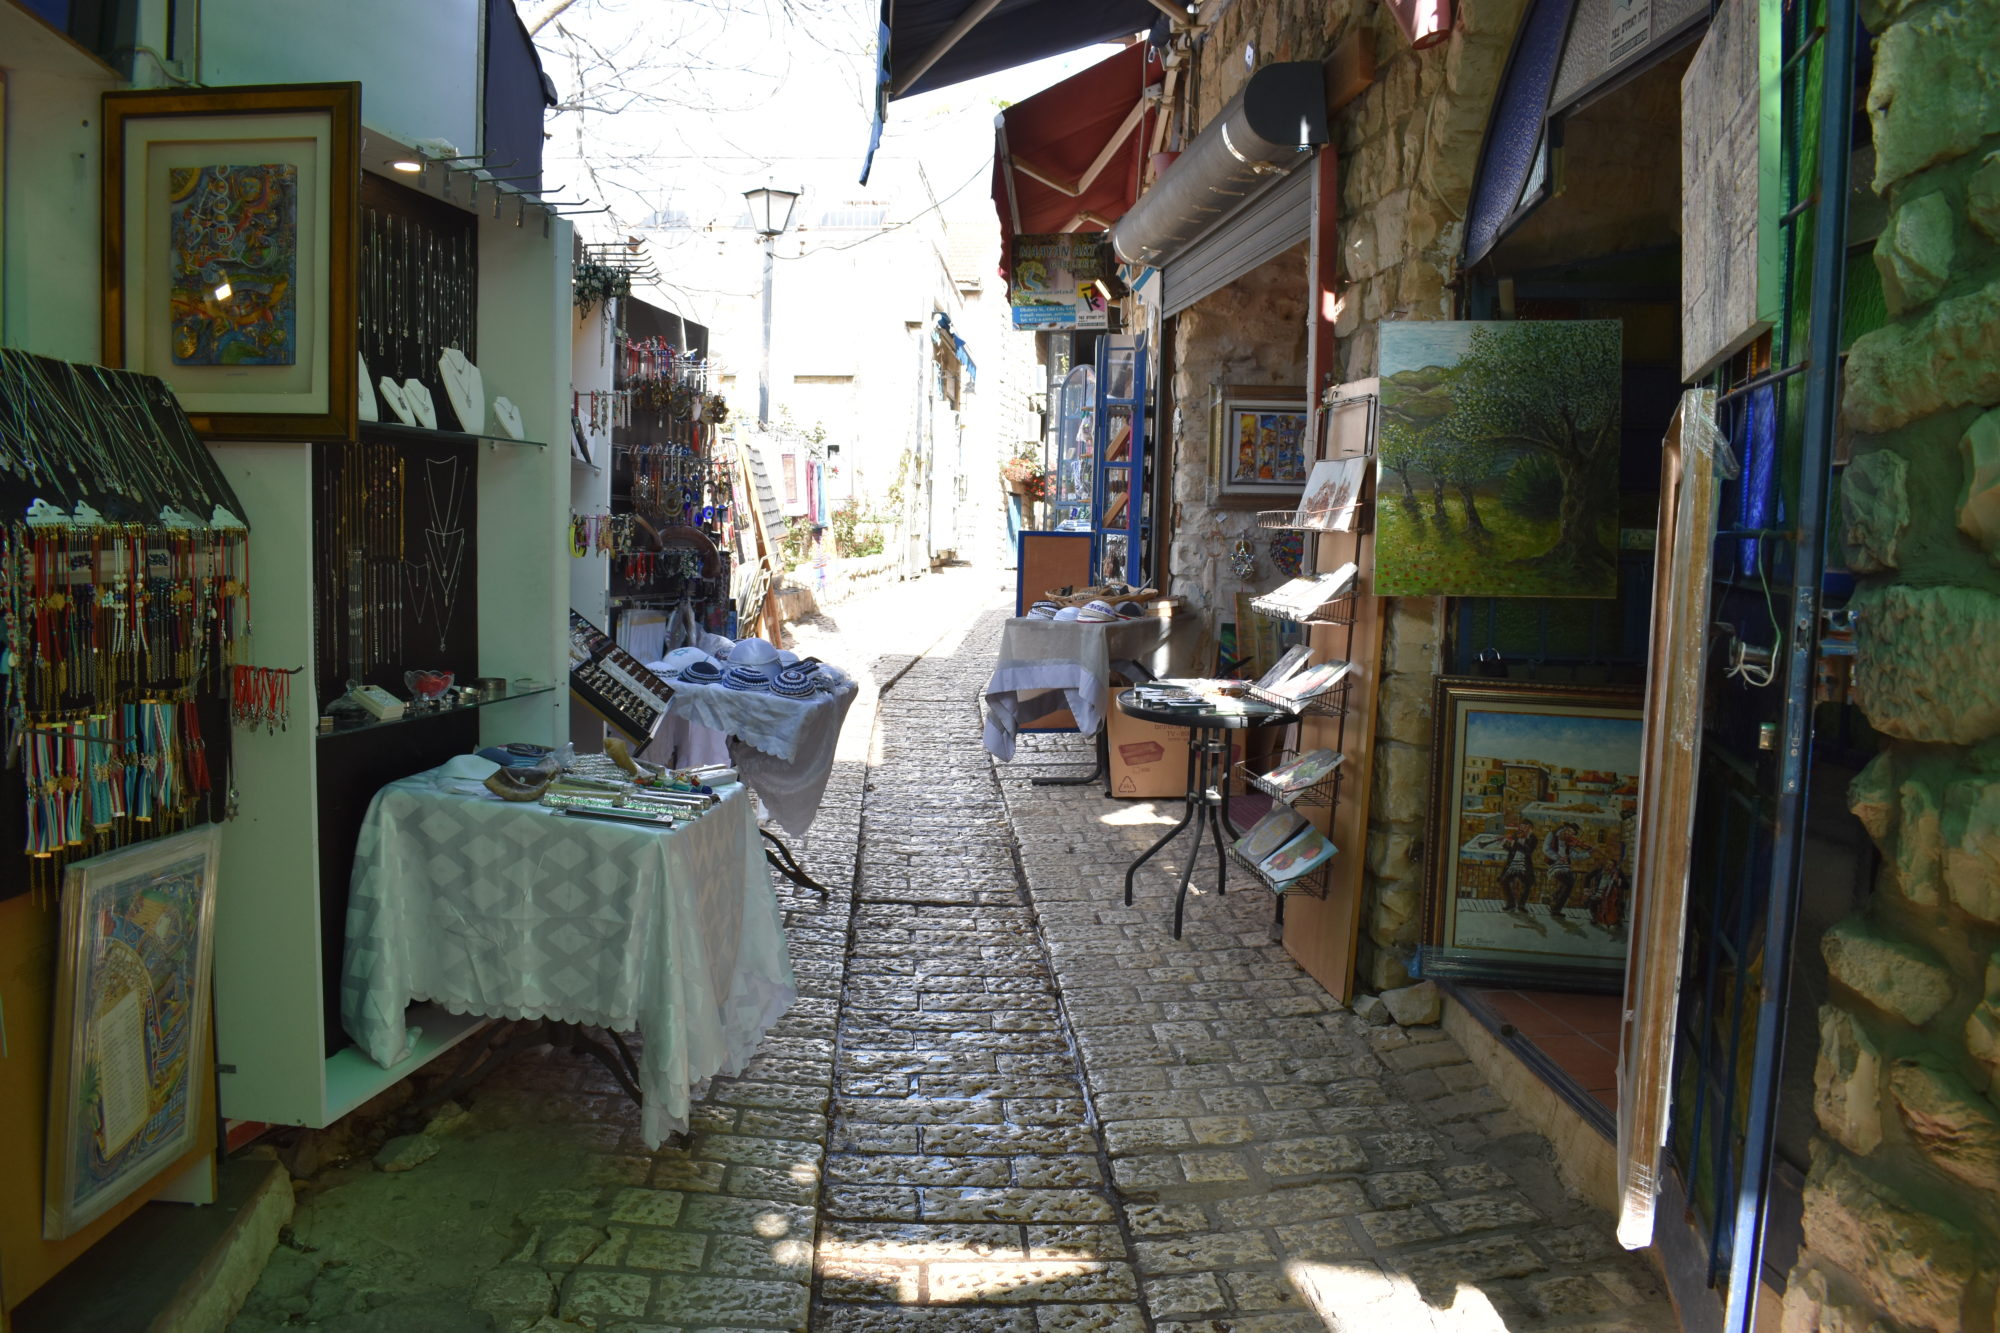 The artists' quarter of Safed